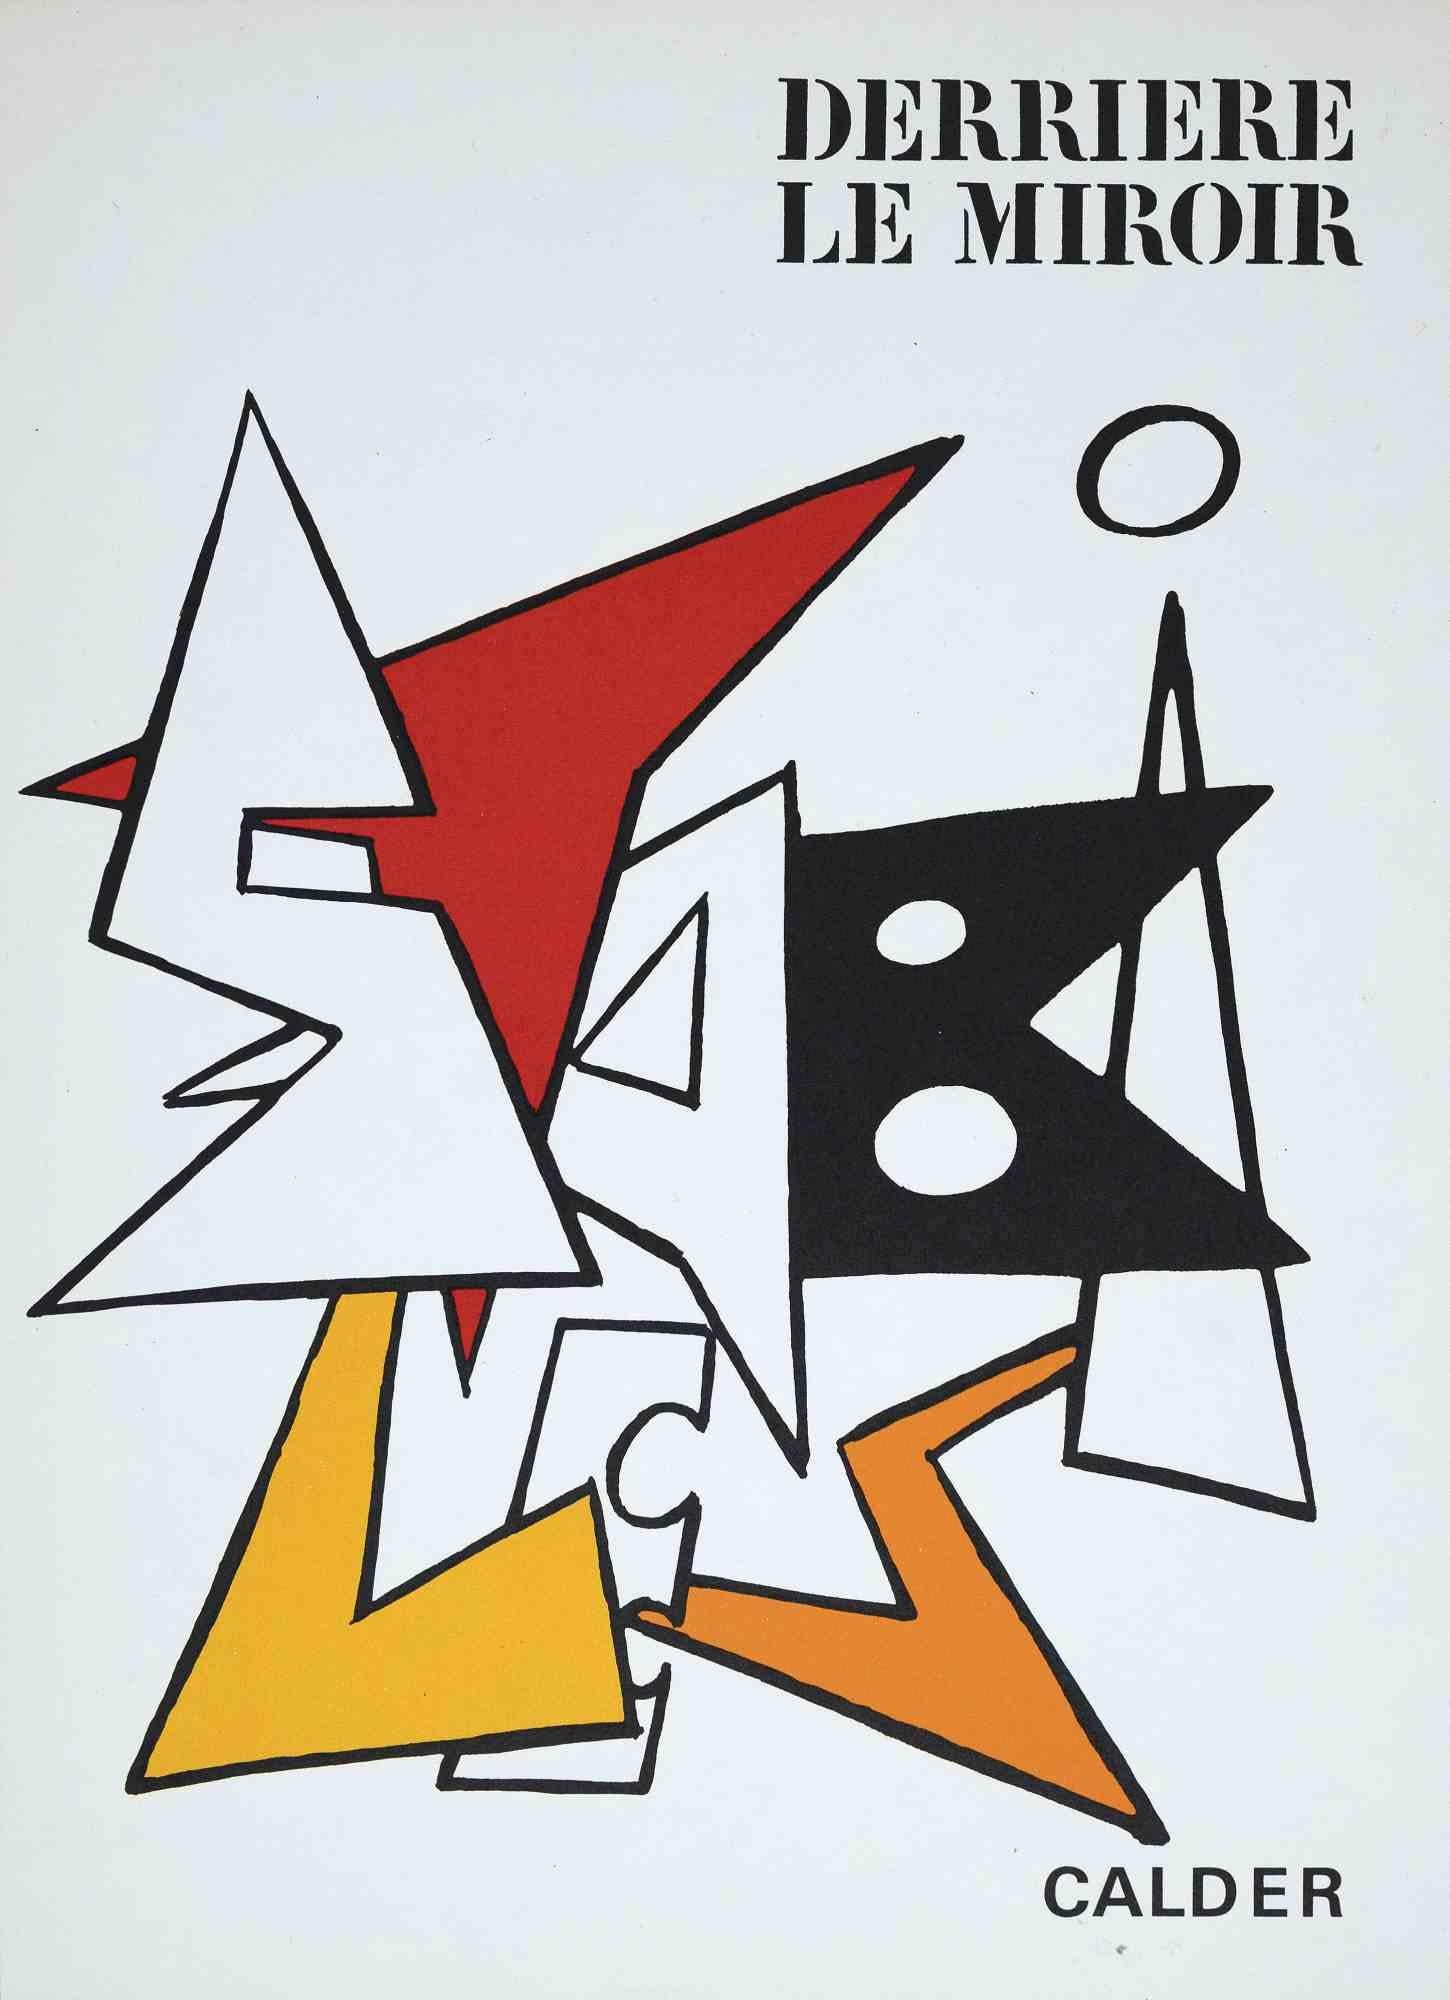 Cover for Derriere Le Miroir is an original lithograph realized by Alexander Calder in 1963 for the Art Magazine Derrière Le Miroir no. 141.

The artwork is the cover realized by the artist for  Derriere Le Miroir.   Printed by Ateliers de Maeght,